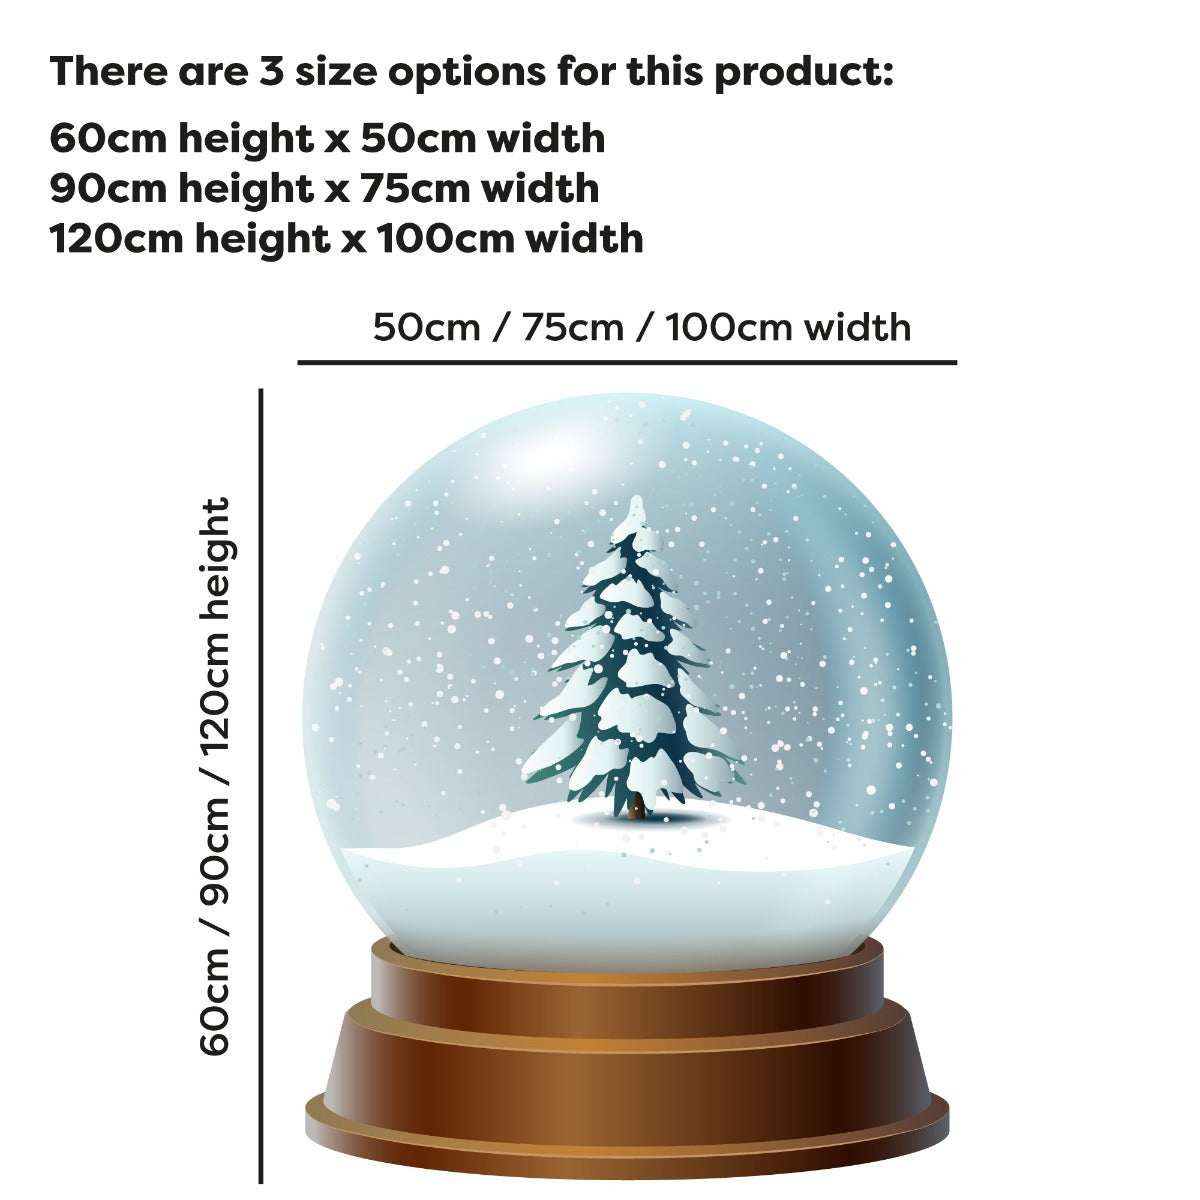 Christmas Tree Snow Globe Wall Decal